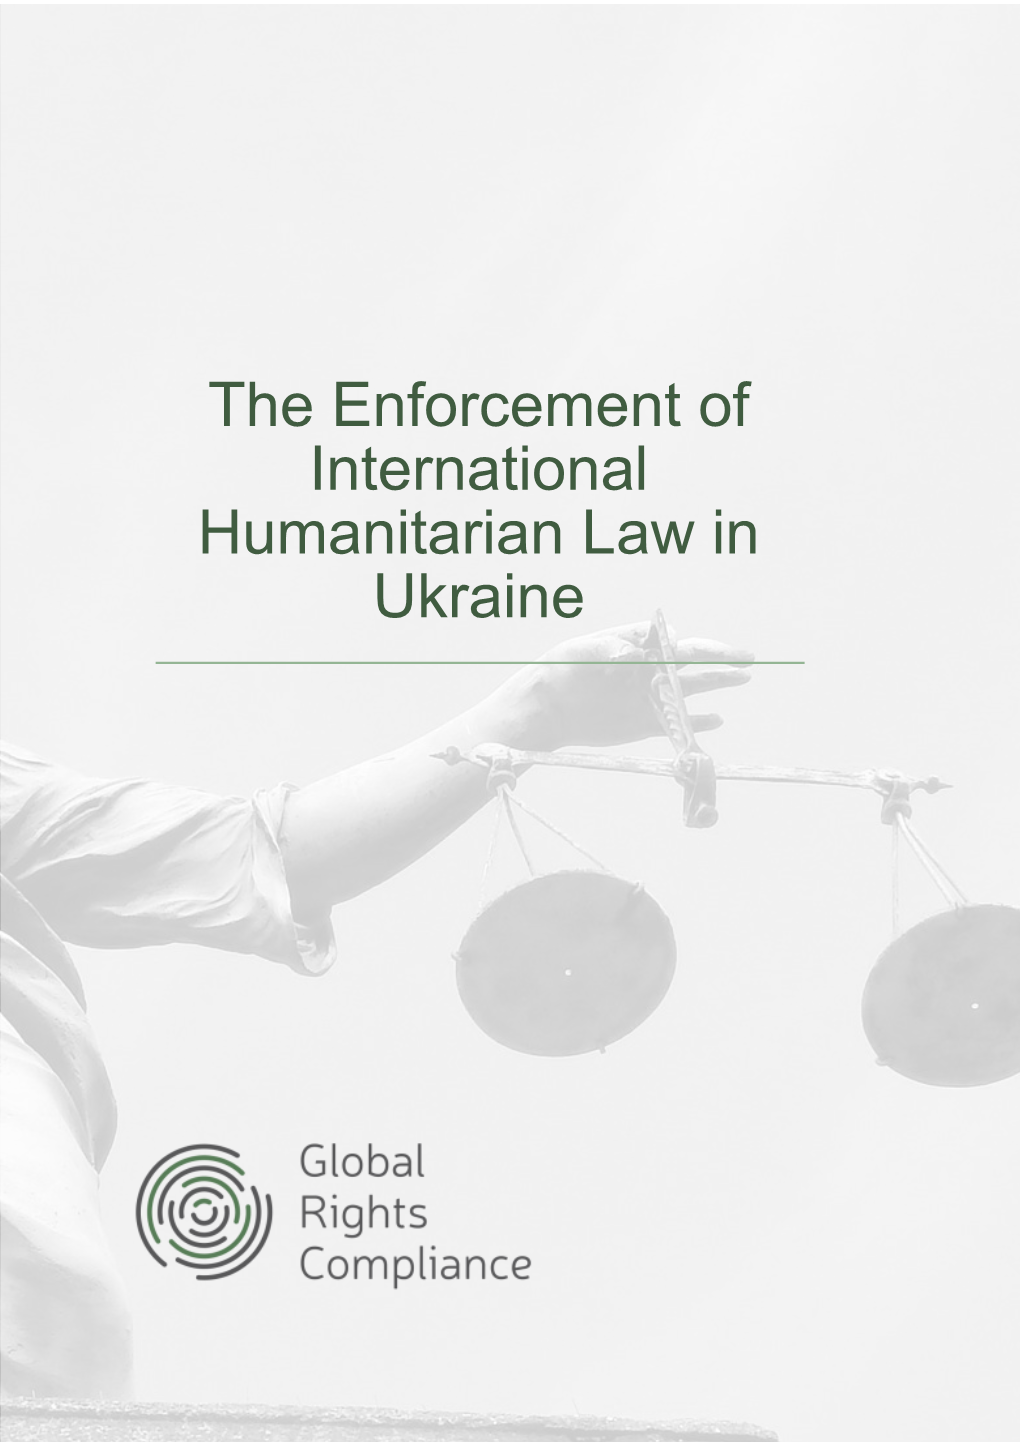 The Enforcement of International Humanitarian Law in Ukraine